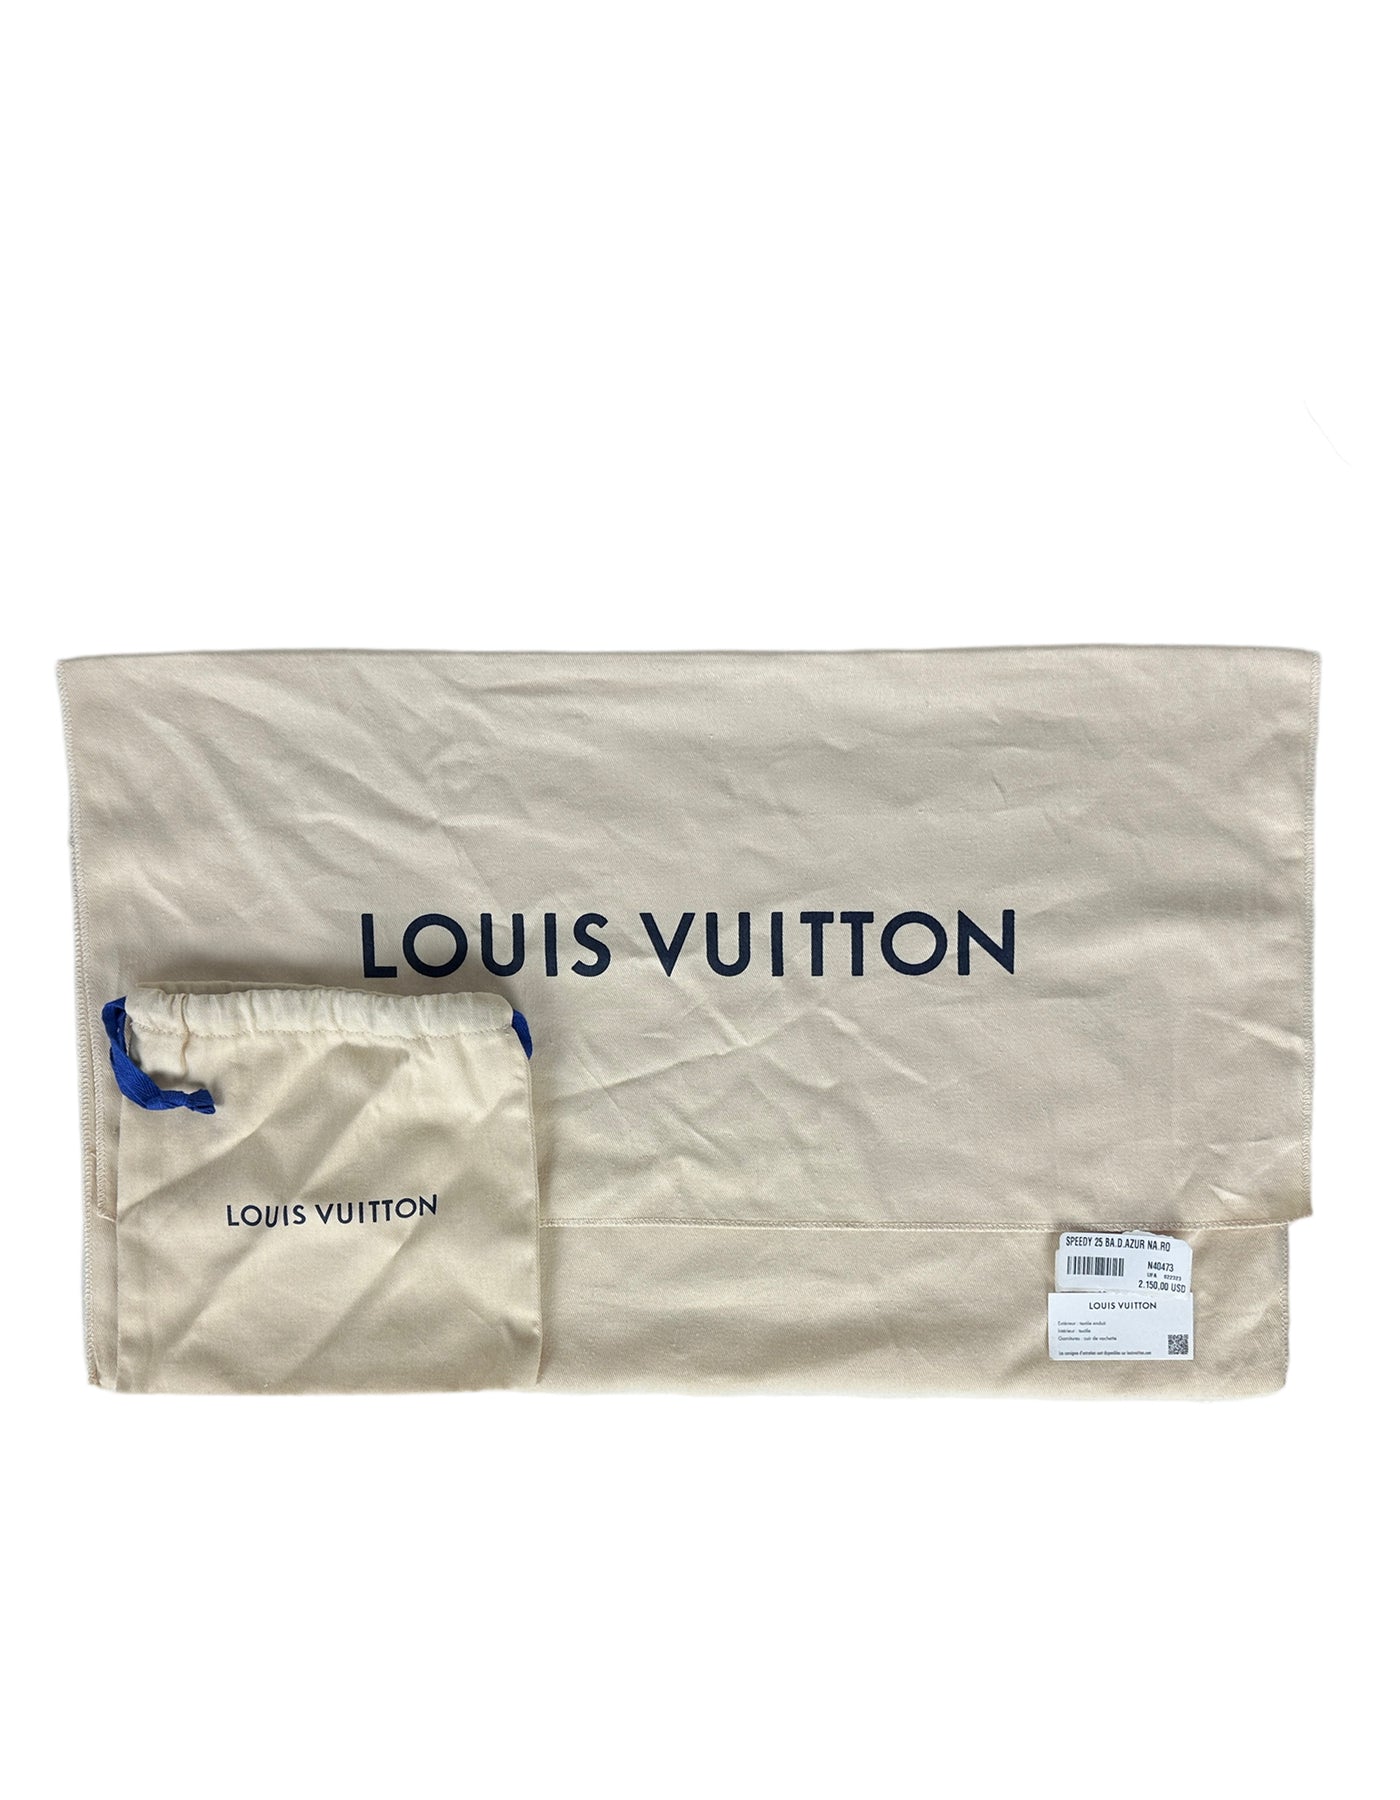 Louis Vuitton Damier Azur Nautical Speedy Bandouliere 25